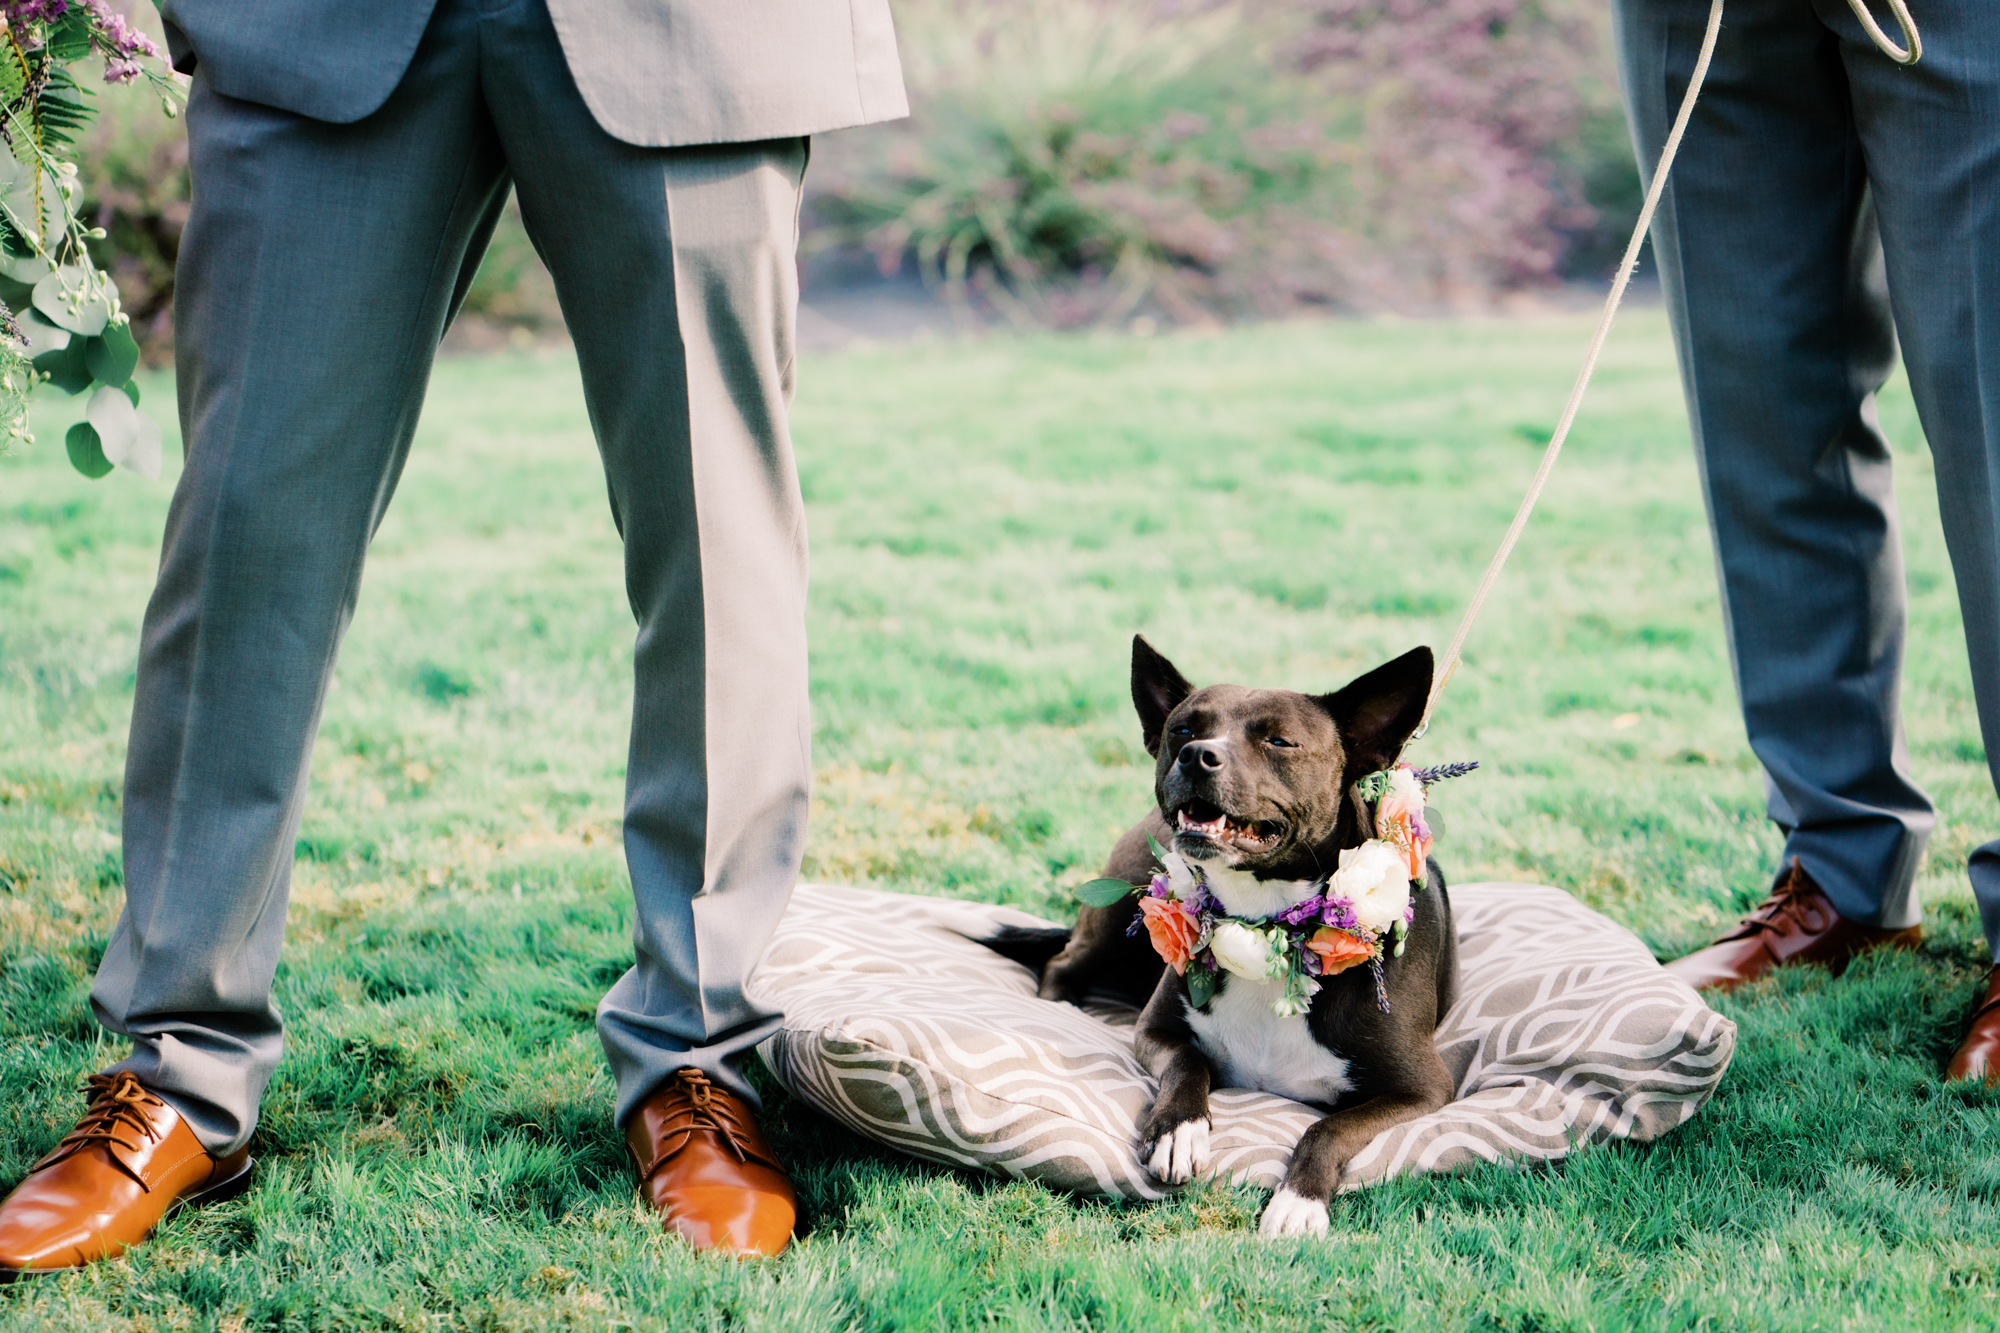 Woodinville Lavender Farm weddings: Wedding ceremony with dog